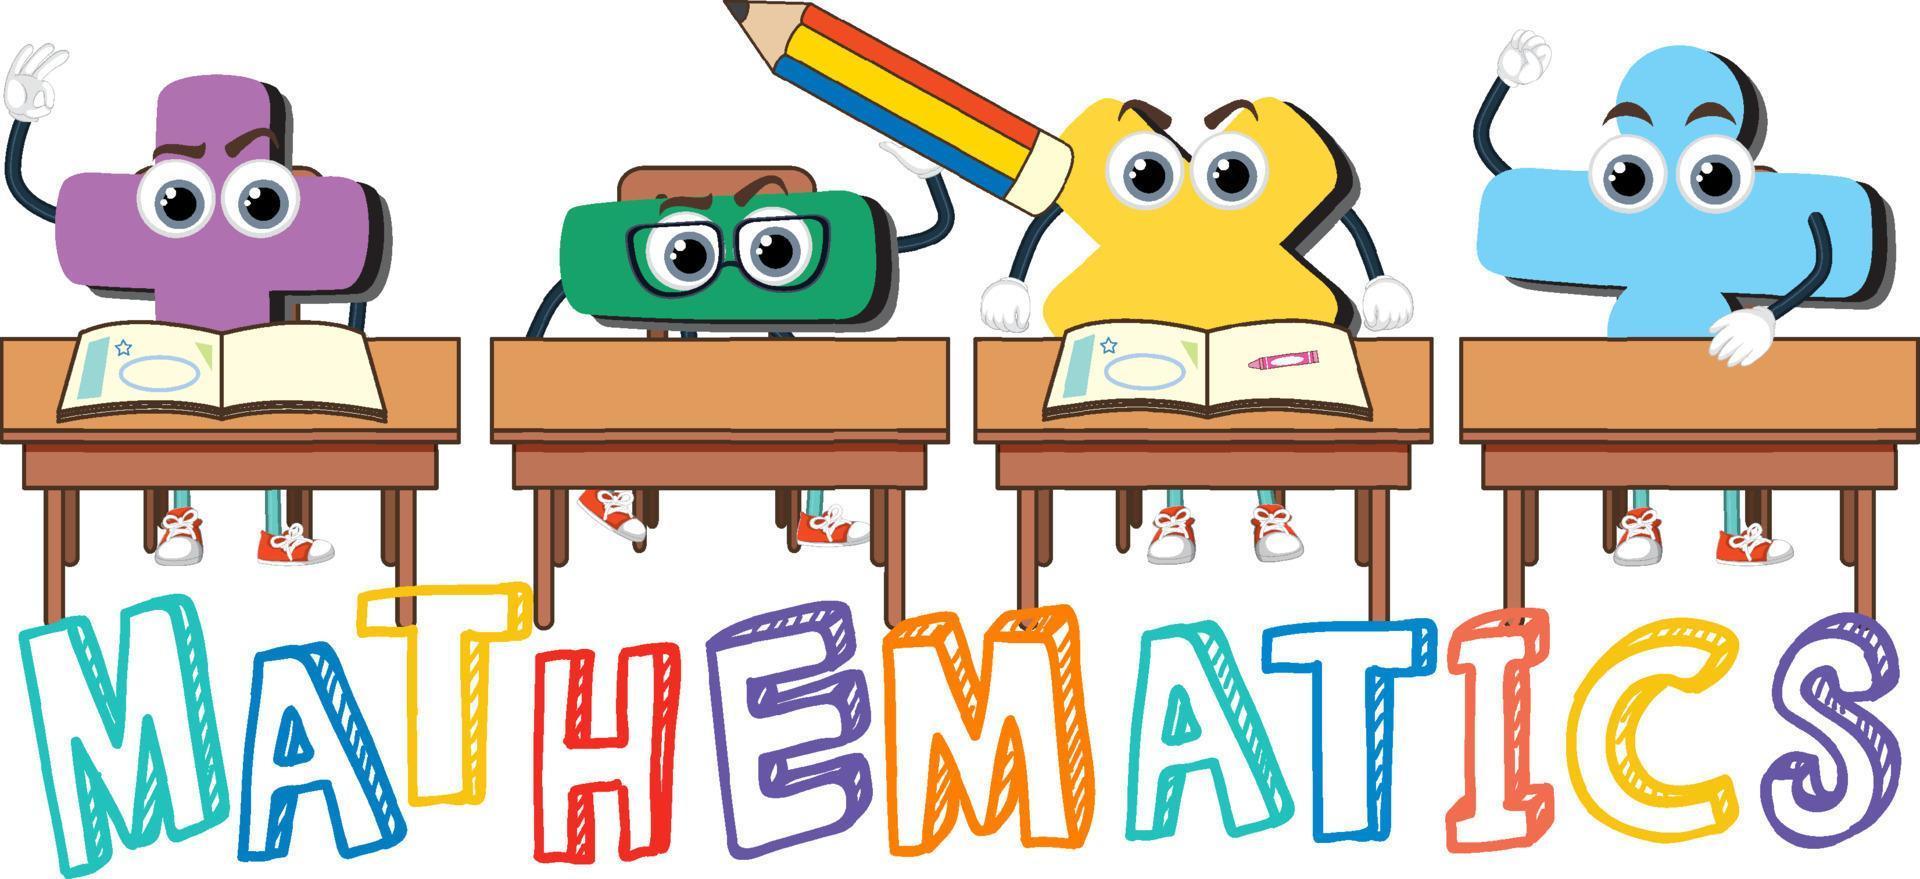 Mathematik-Wort-Logo im Cartoon-Stil vektor